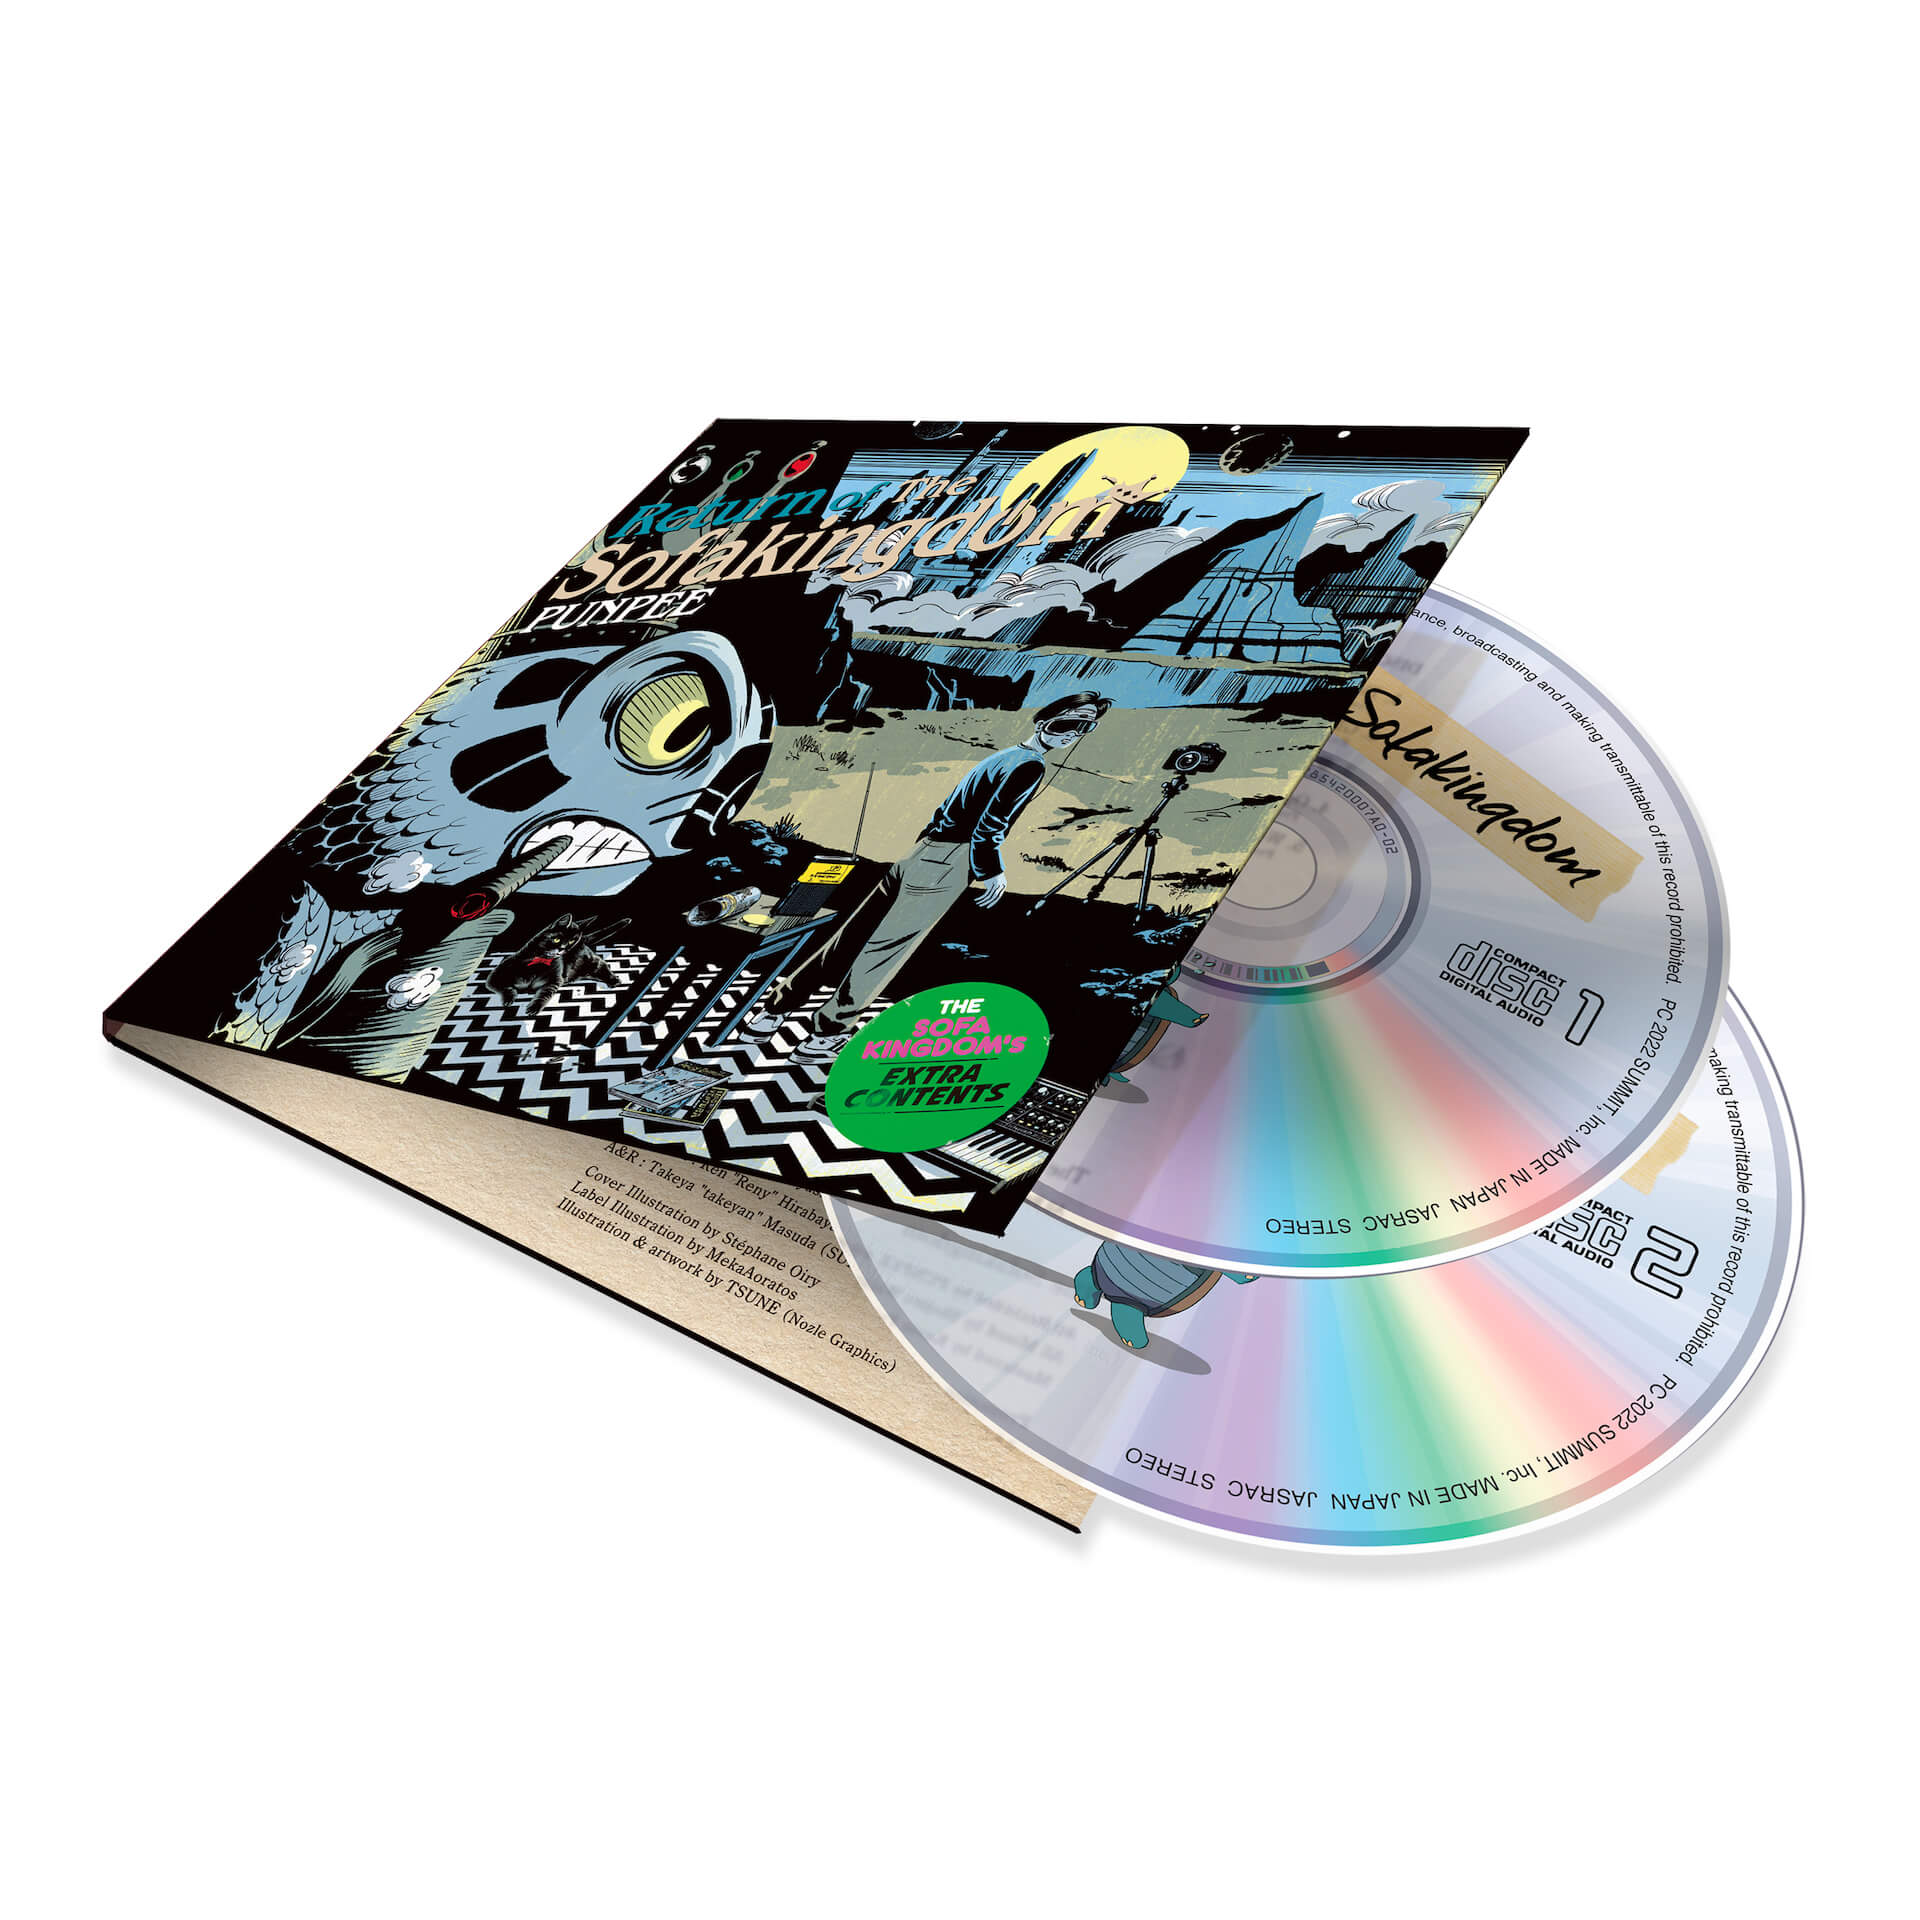 PUNPEE、『The Sofakingdom』『Return of The Sofakingdom』2CDが見開きジャケットの豪華仕様でリリース music230201-punpee-3